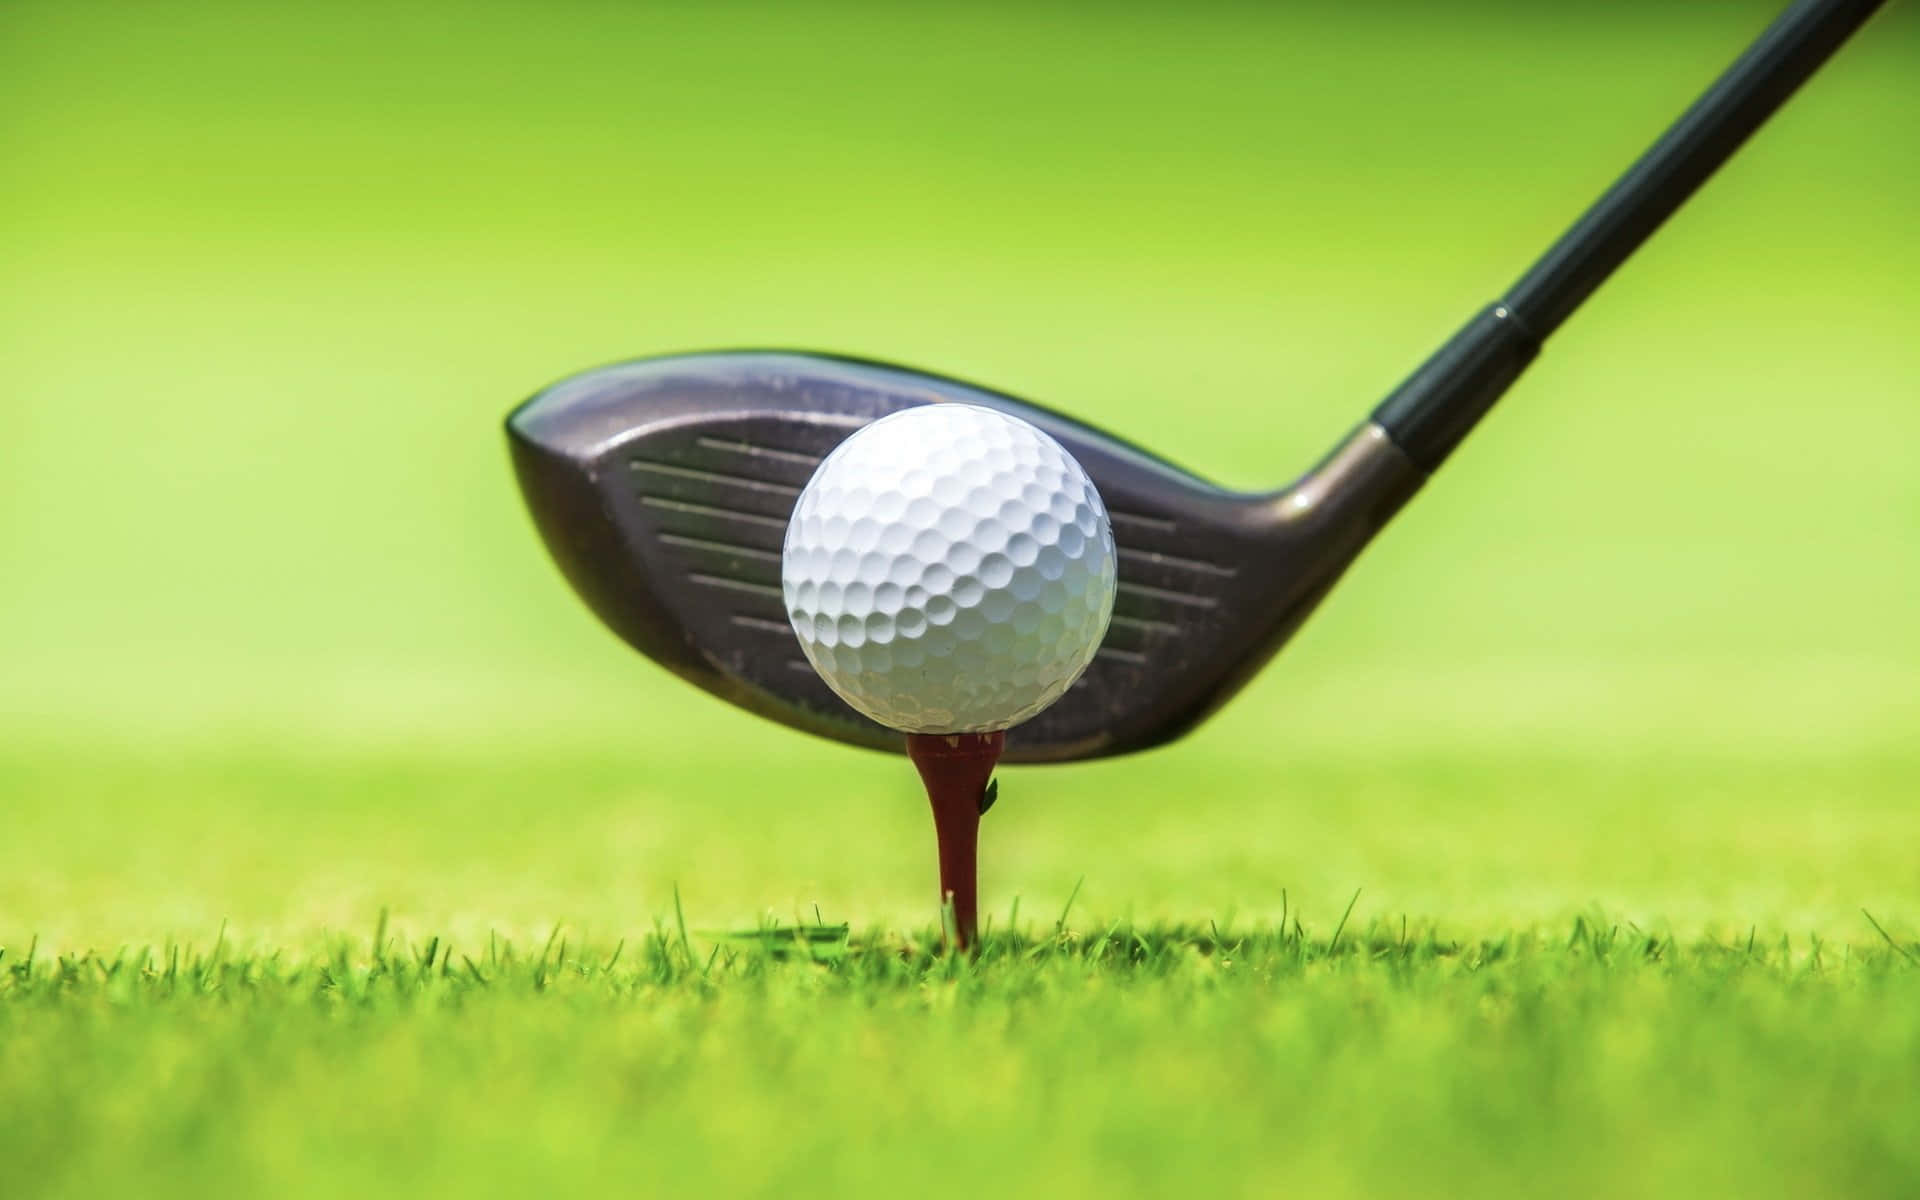 Watch The Perfect Swing in 3D Golf Desktop Wallpaper